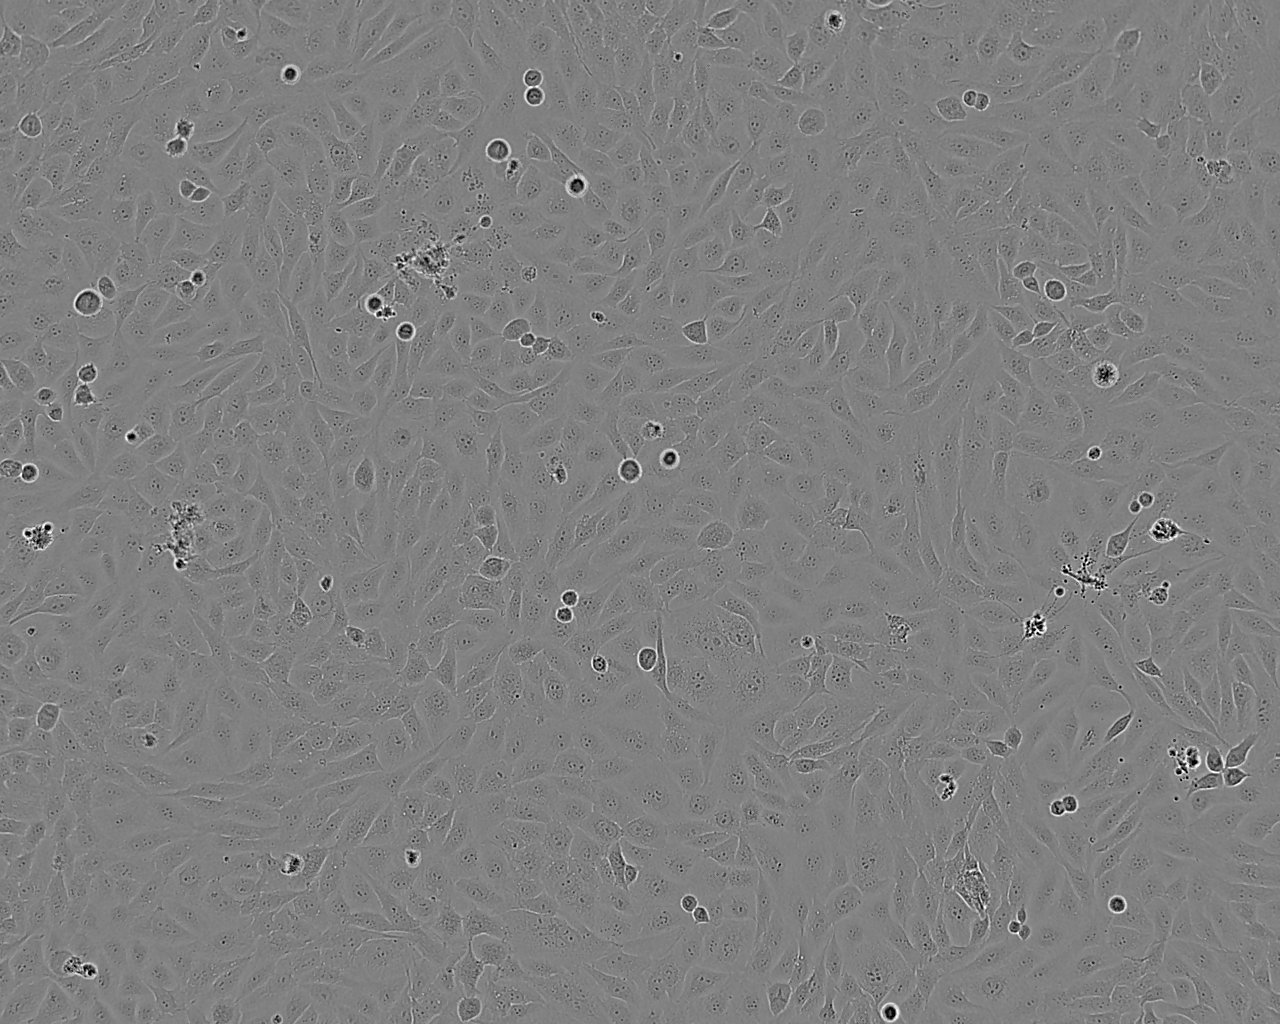 MCA-205 epithelioid cells小鼠纤维肉瘤细胞系